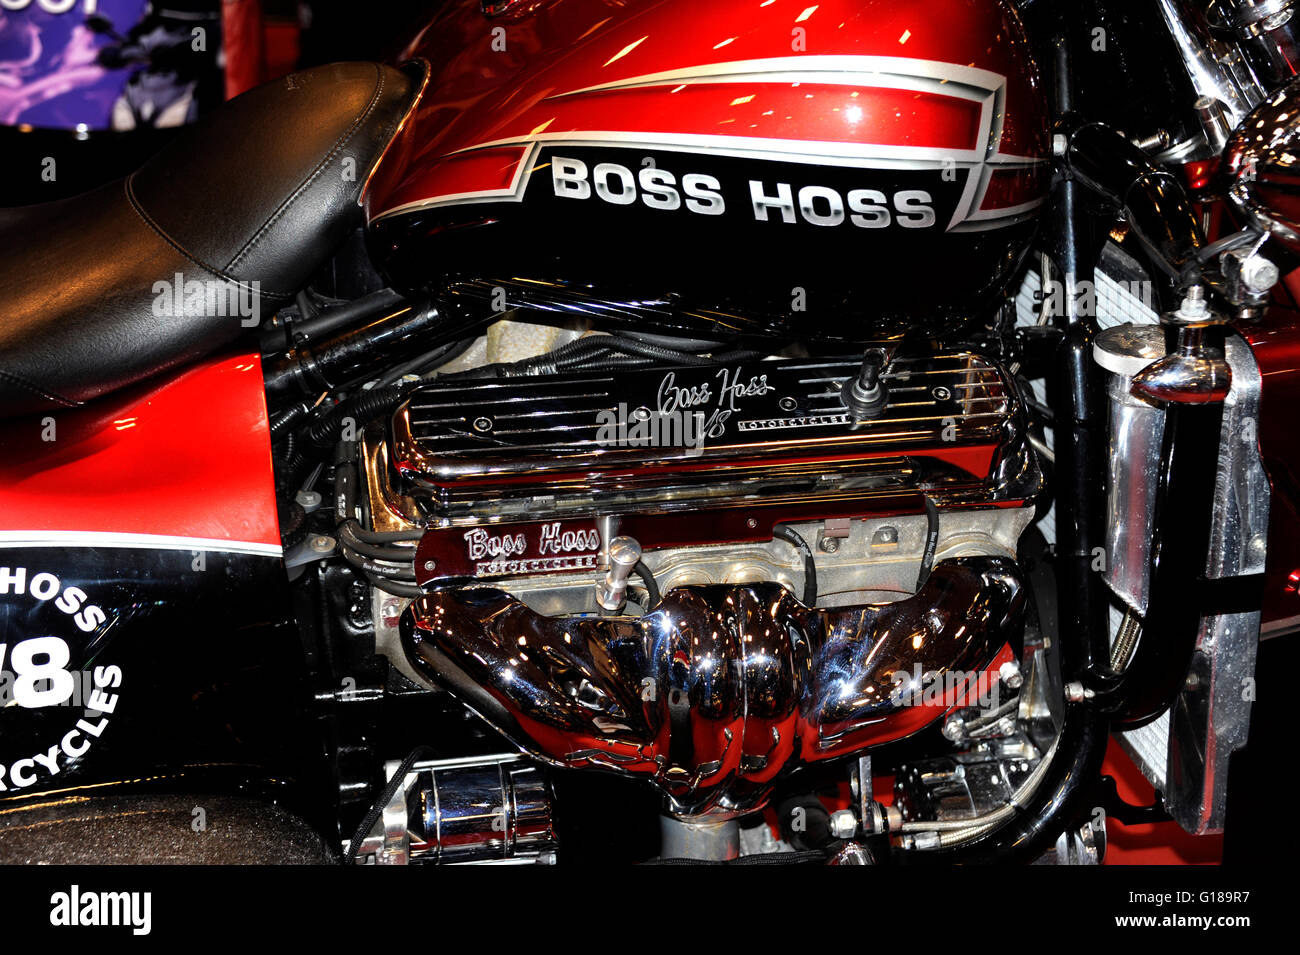 American Boss Hoss V8 Motorcyles, Paris Motorcycle Show, France Stock Photo  - Alamy